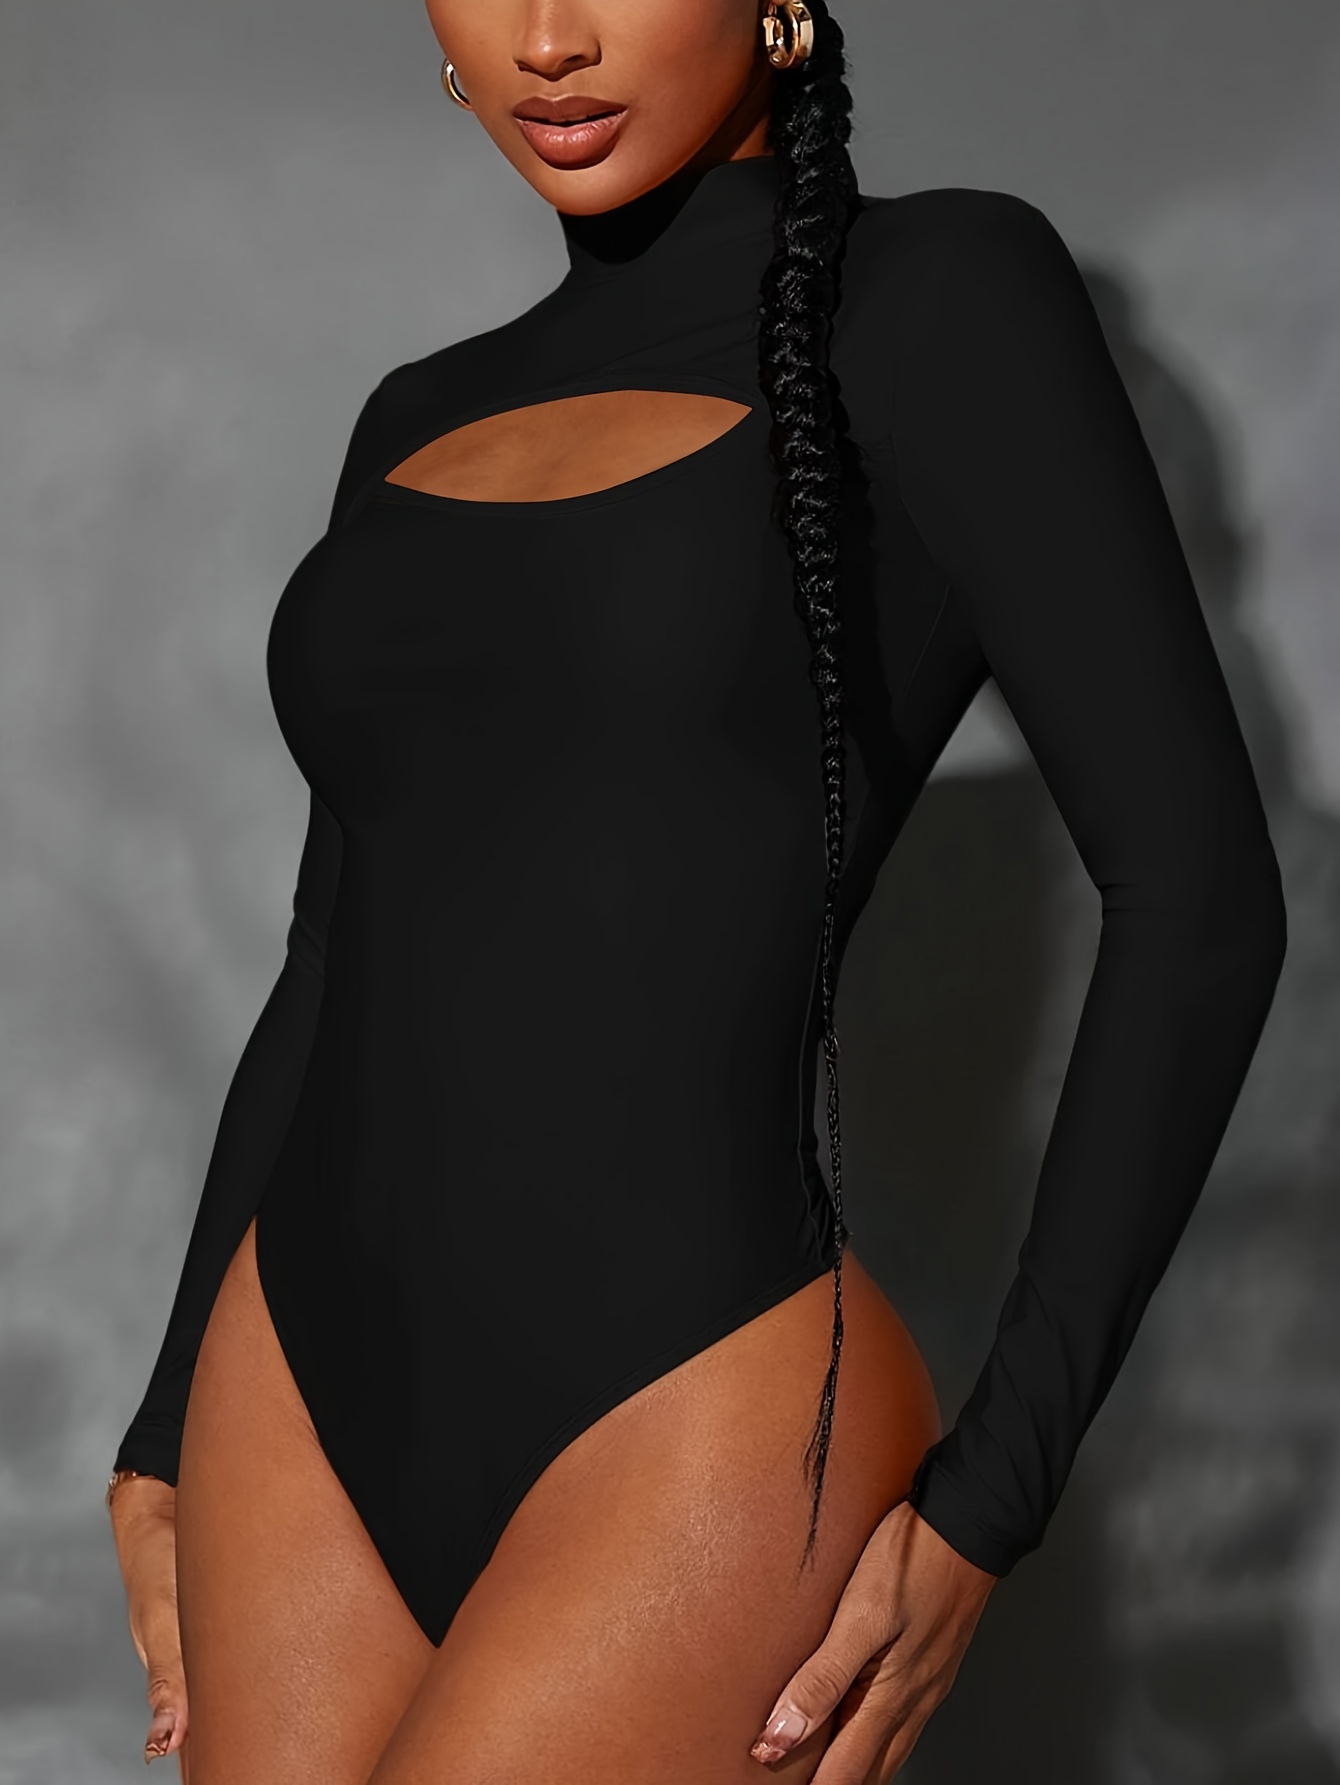 FeelinGirl Black Long Sleeve Tops Bodysuit for Women Body Sculpting Bodysuit  Corset Daily Top Thong Slim Body Shaper at  Women's Clothing store